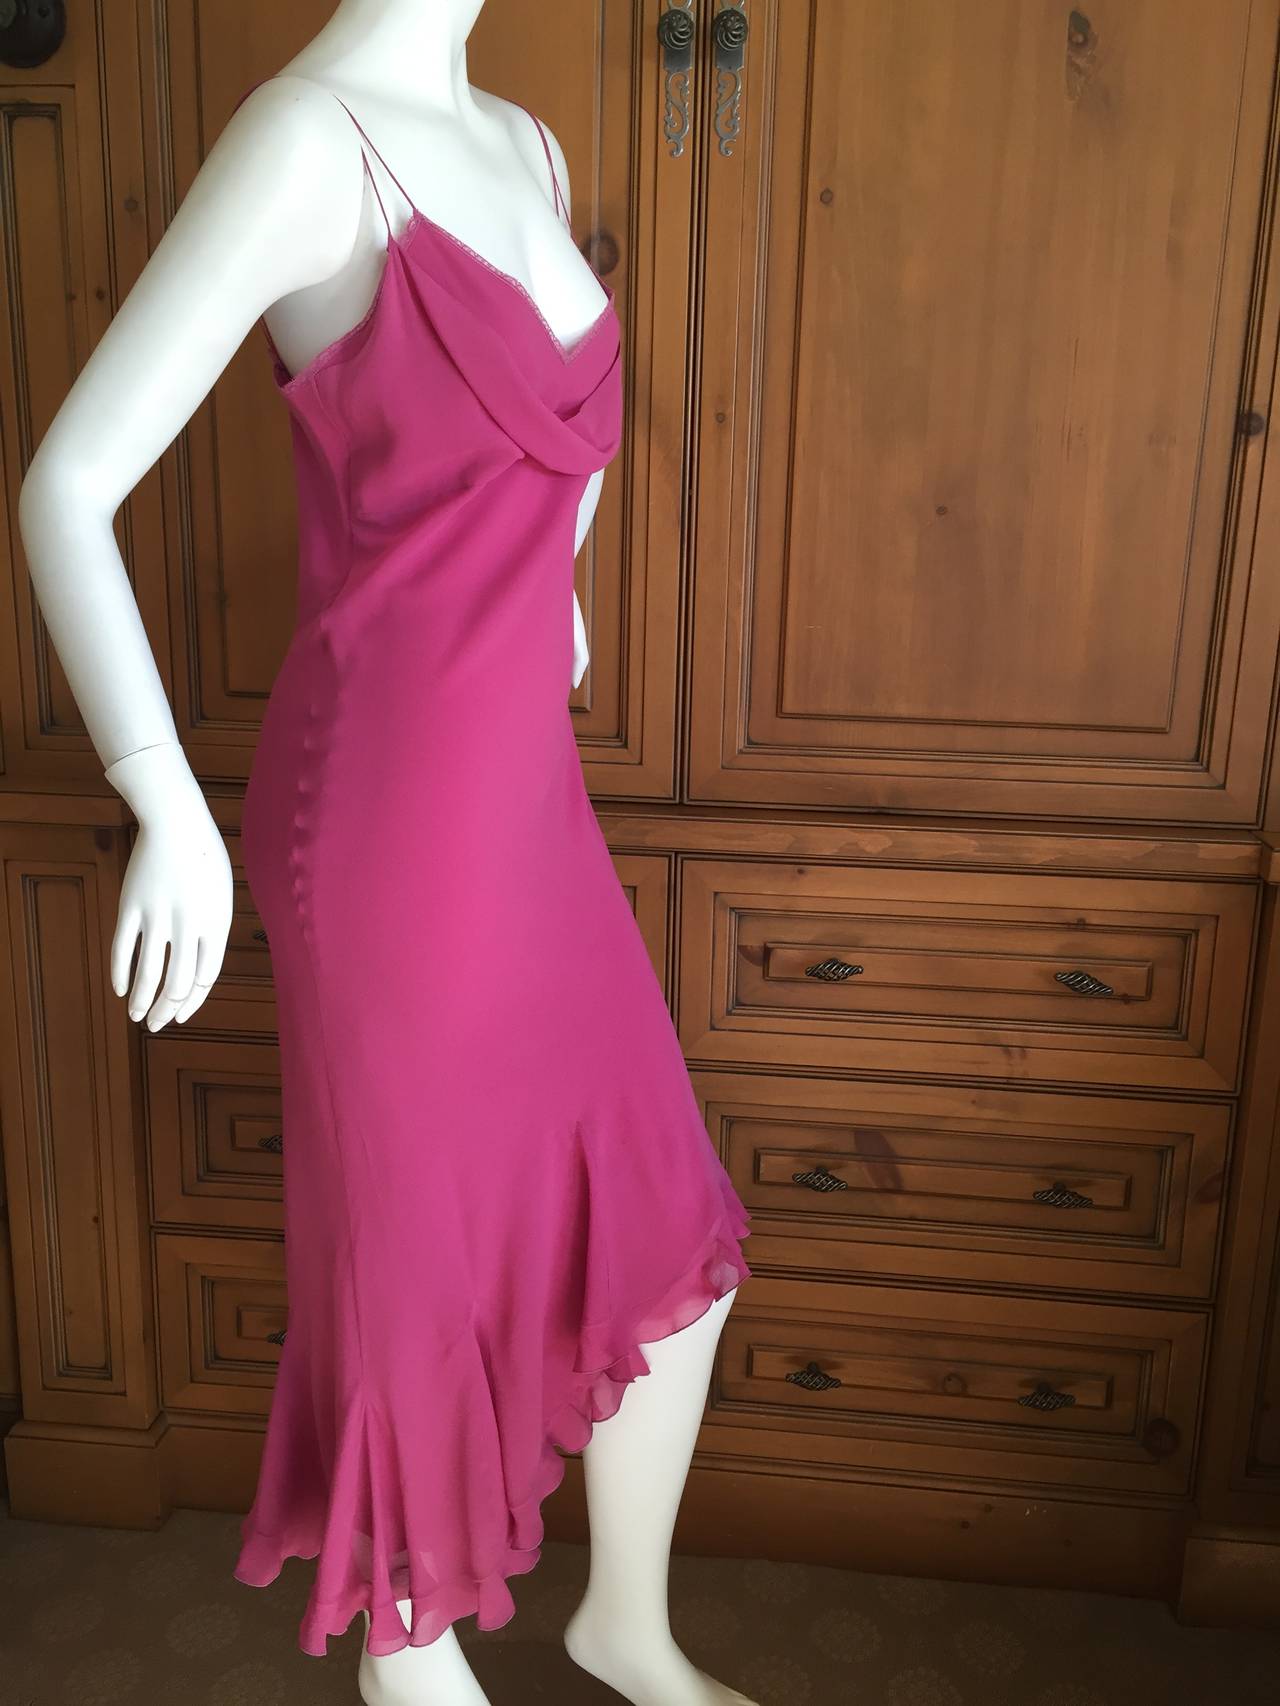 Christian Dior Bias Cut Raspberry Silk Dress by John Galliano 1